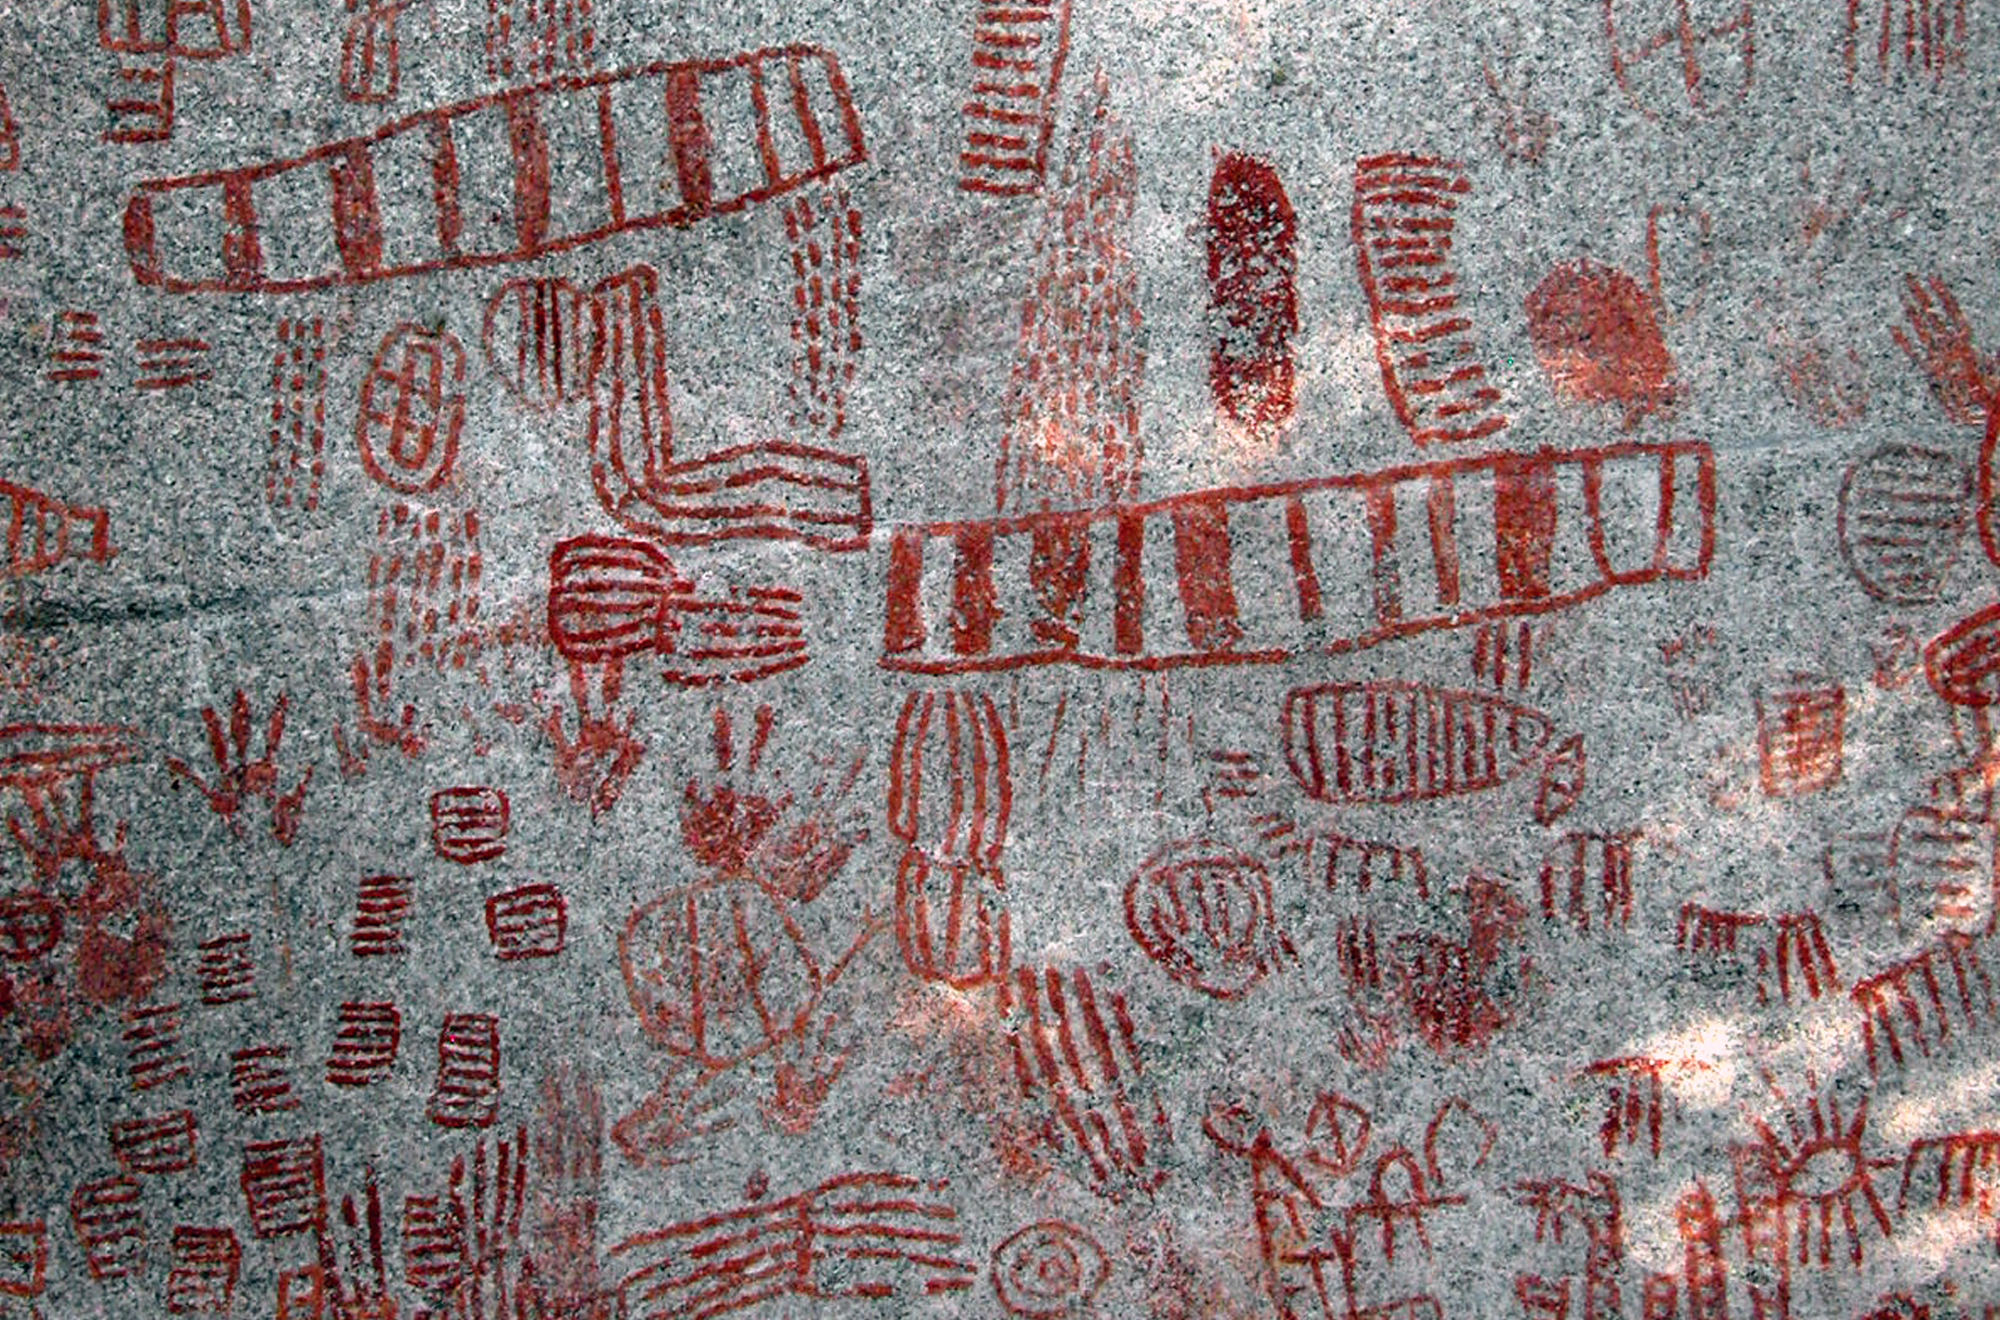 Bradshaw Foundation Pygmy Rock Art Paintings Engravings hunter-gatherer Africa African geometric designs Schematic Art Zone Batwa